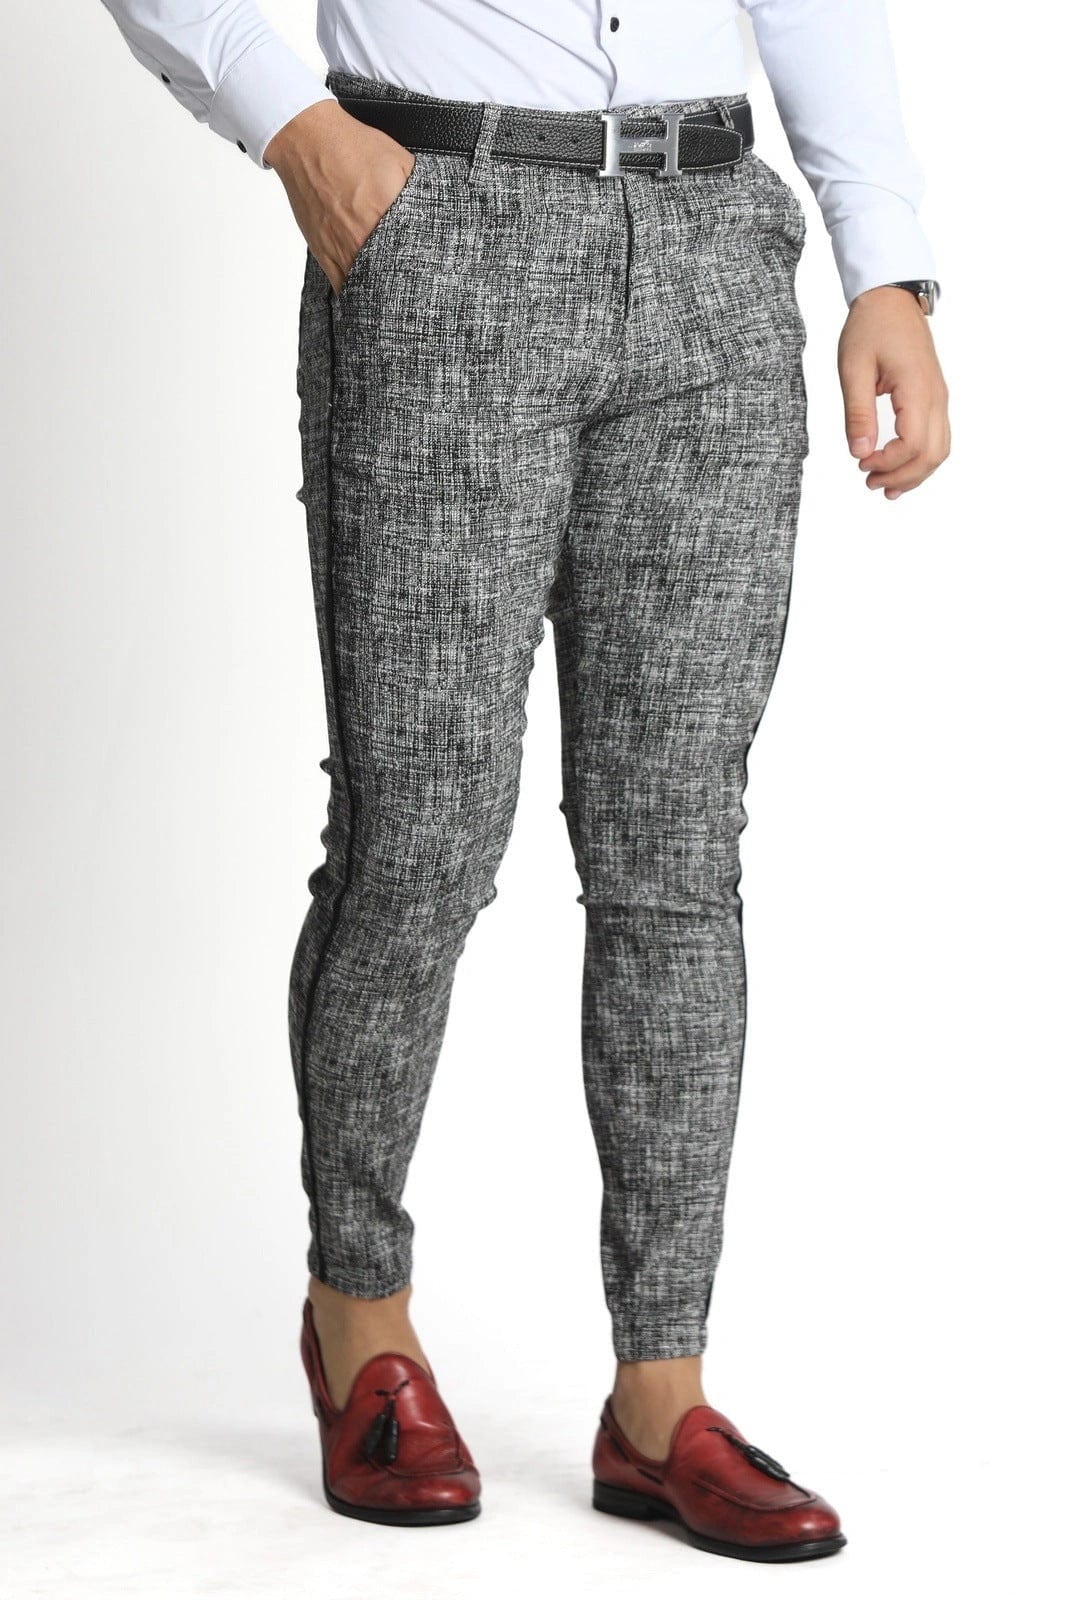 Shop Graphite Grey Slim Fit Dress Pants For Men - Gerardo Collection